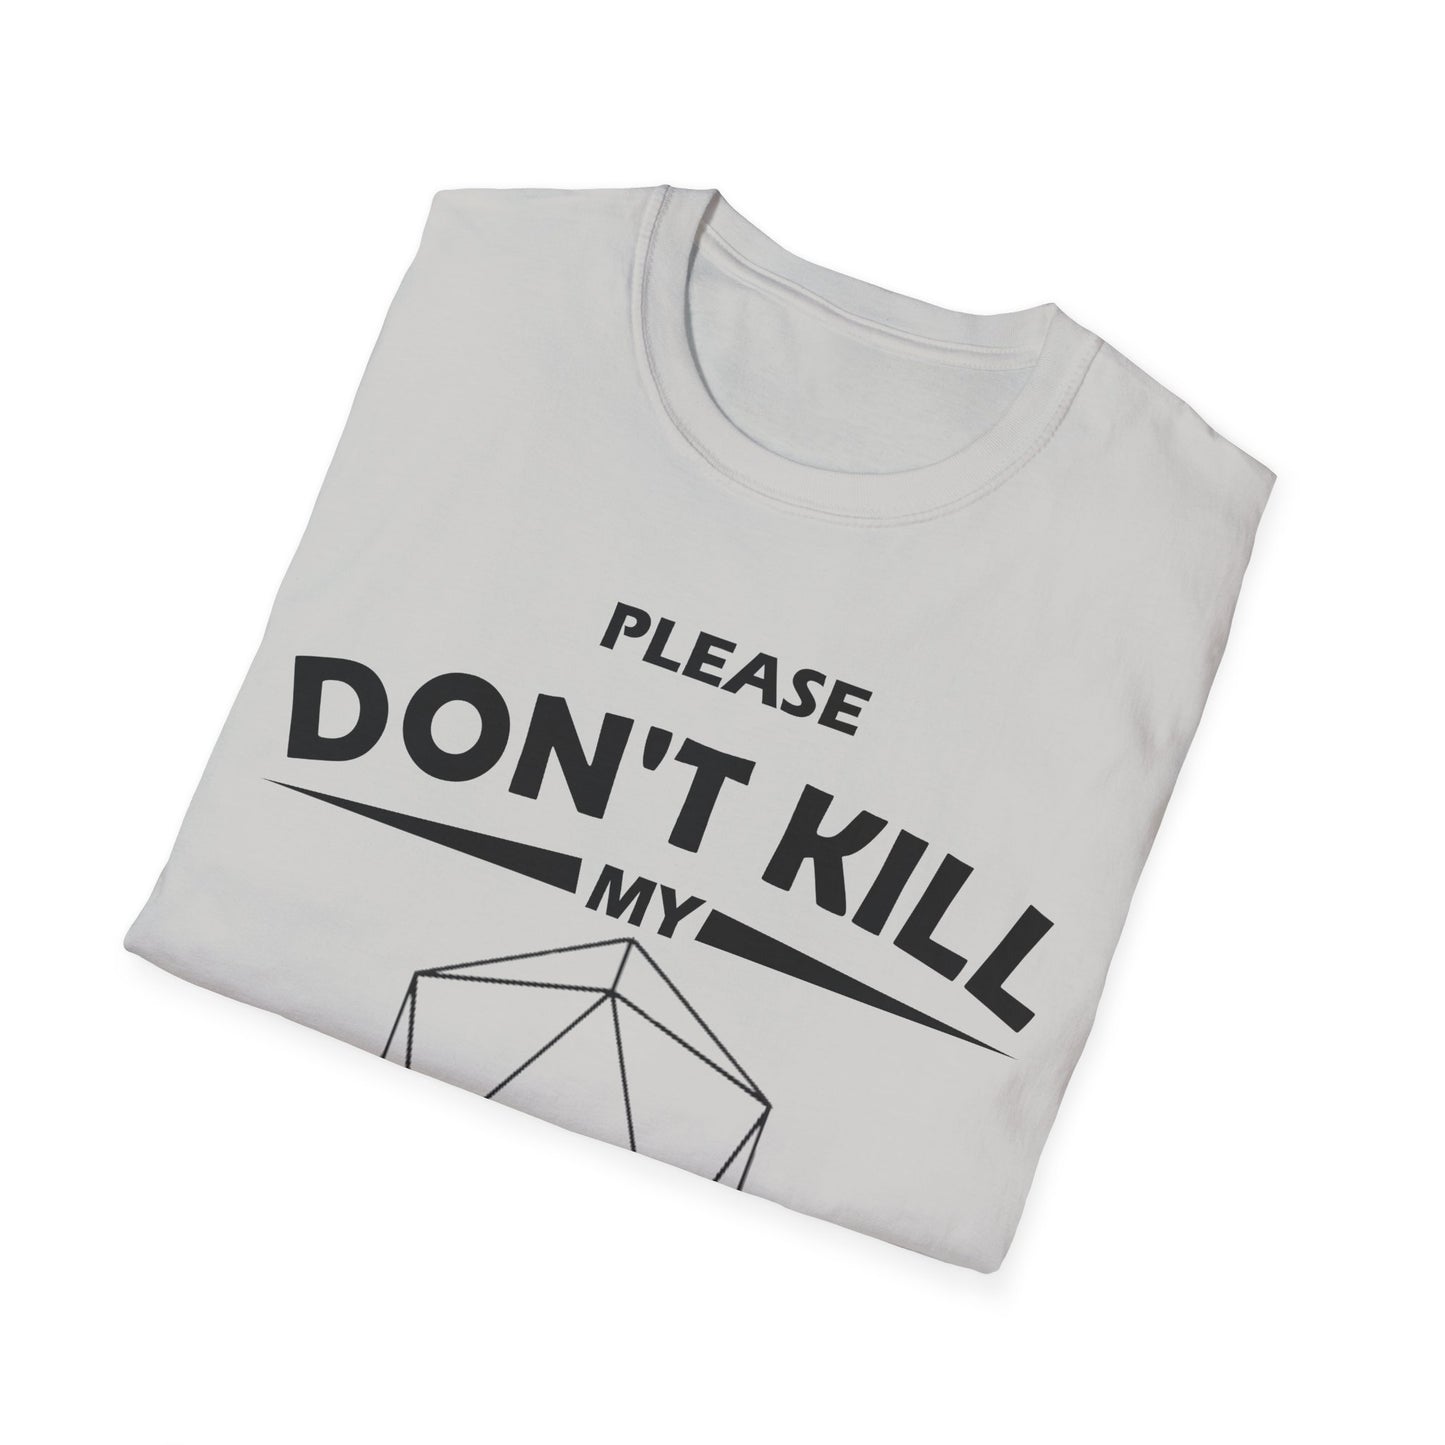 Please Don't Kill My Warlock - Black - Unisex Softstyle T-Shirt